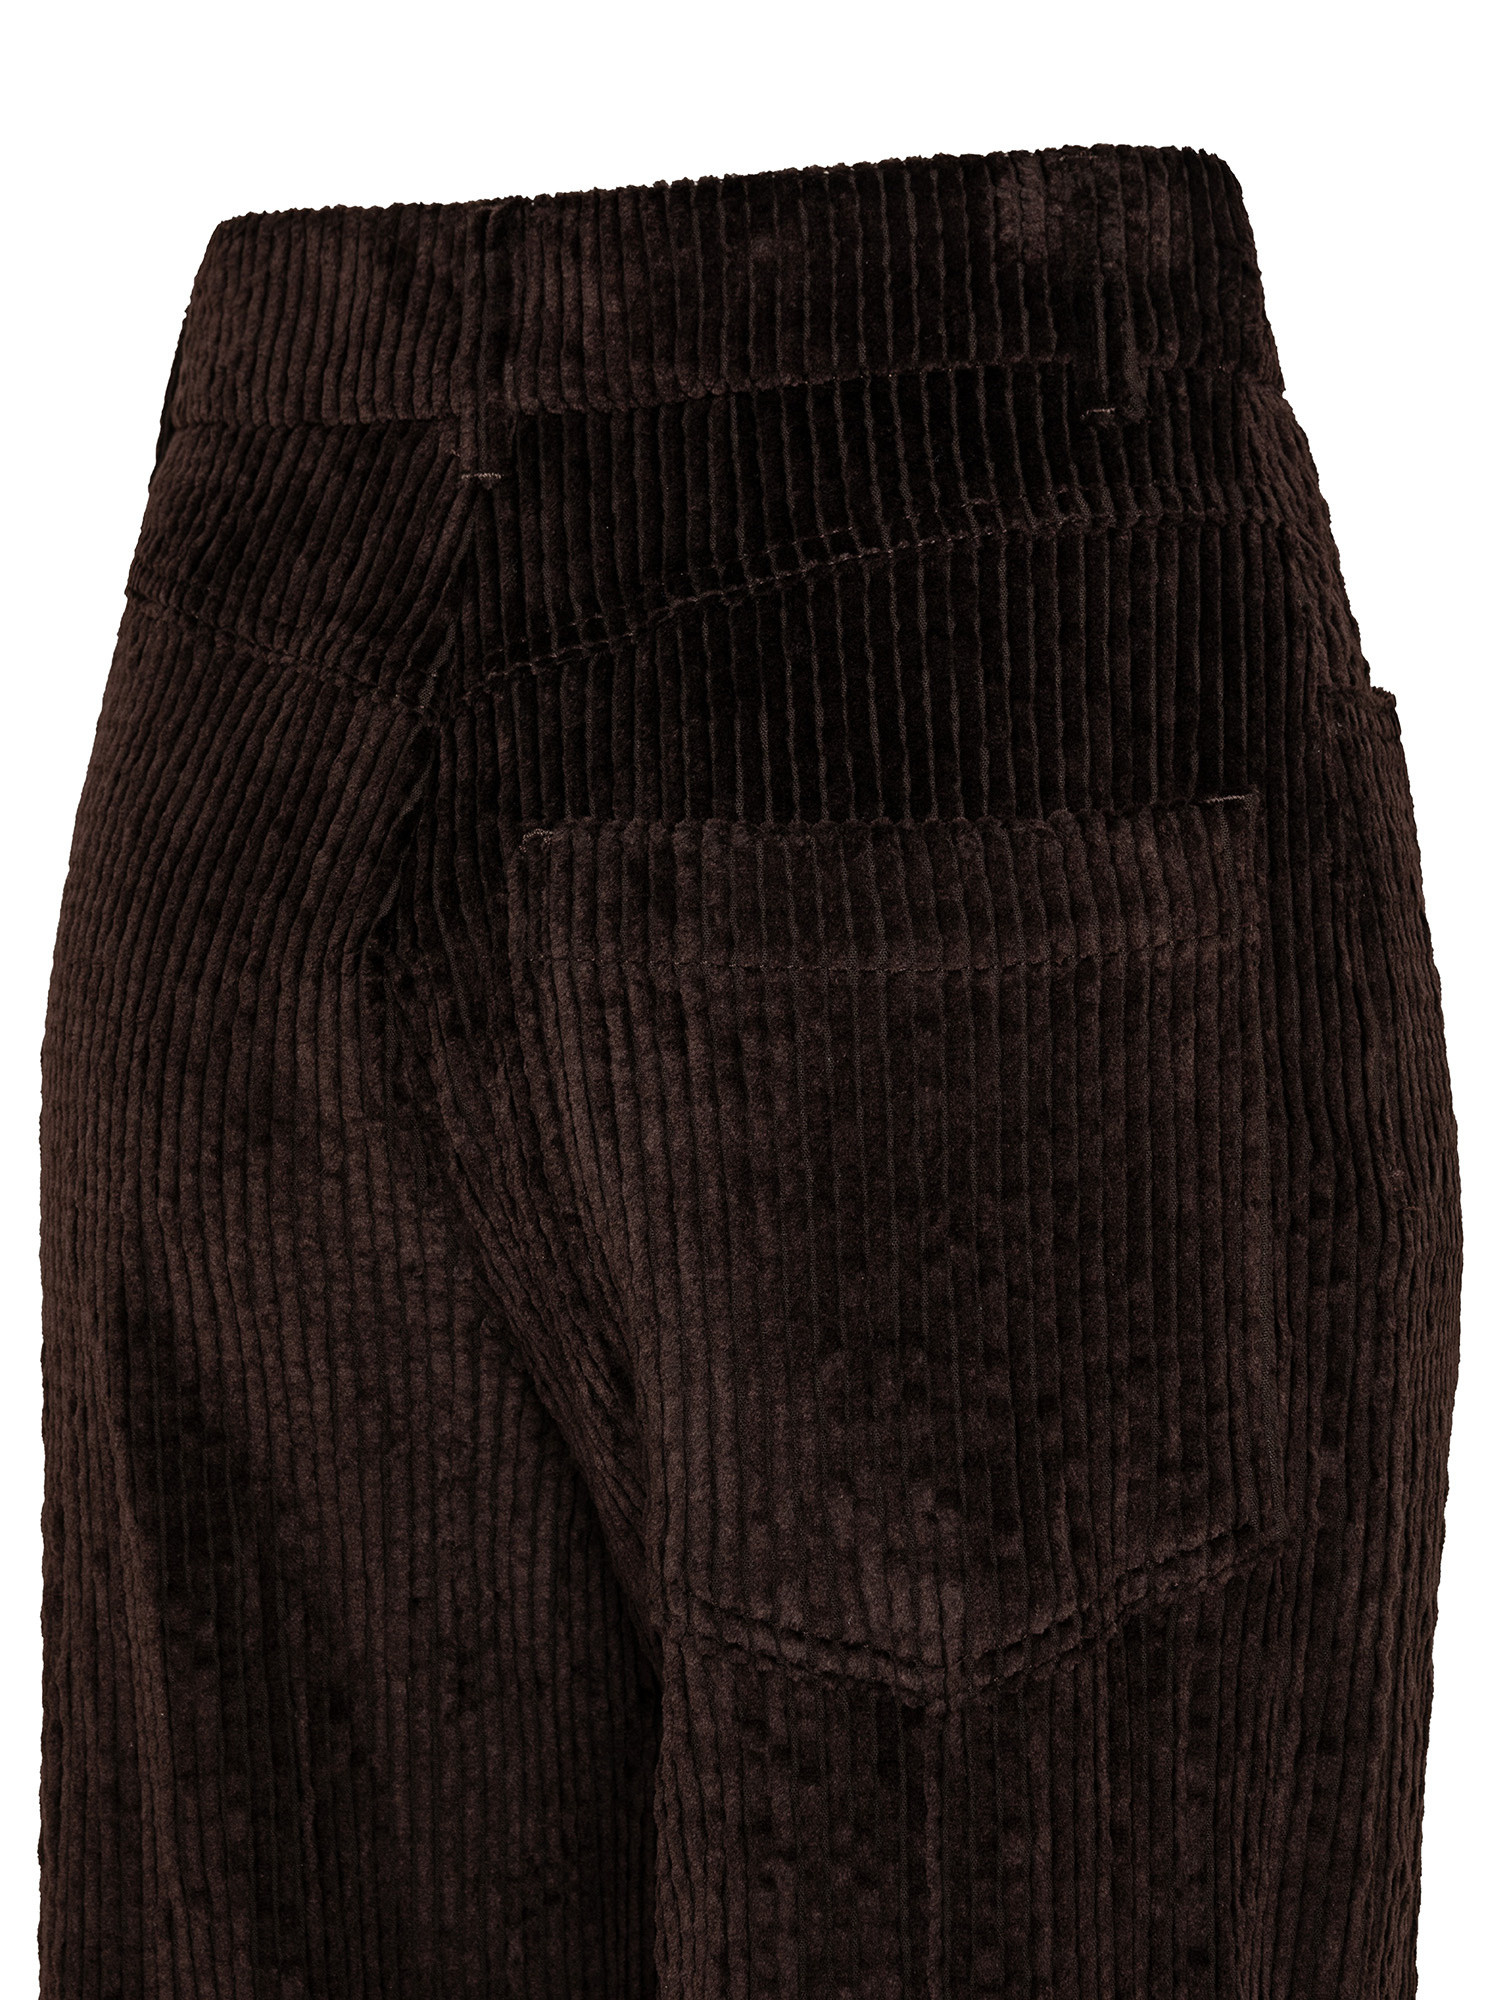 Pantalone a gamba svasata in velluto, Marrone, large image number 2